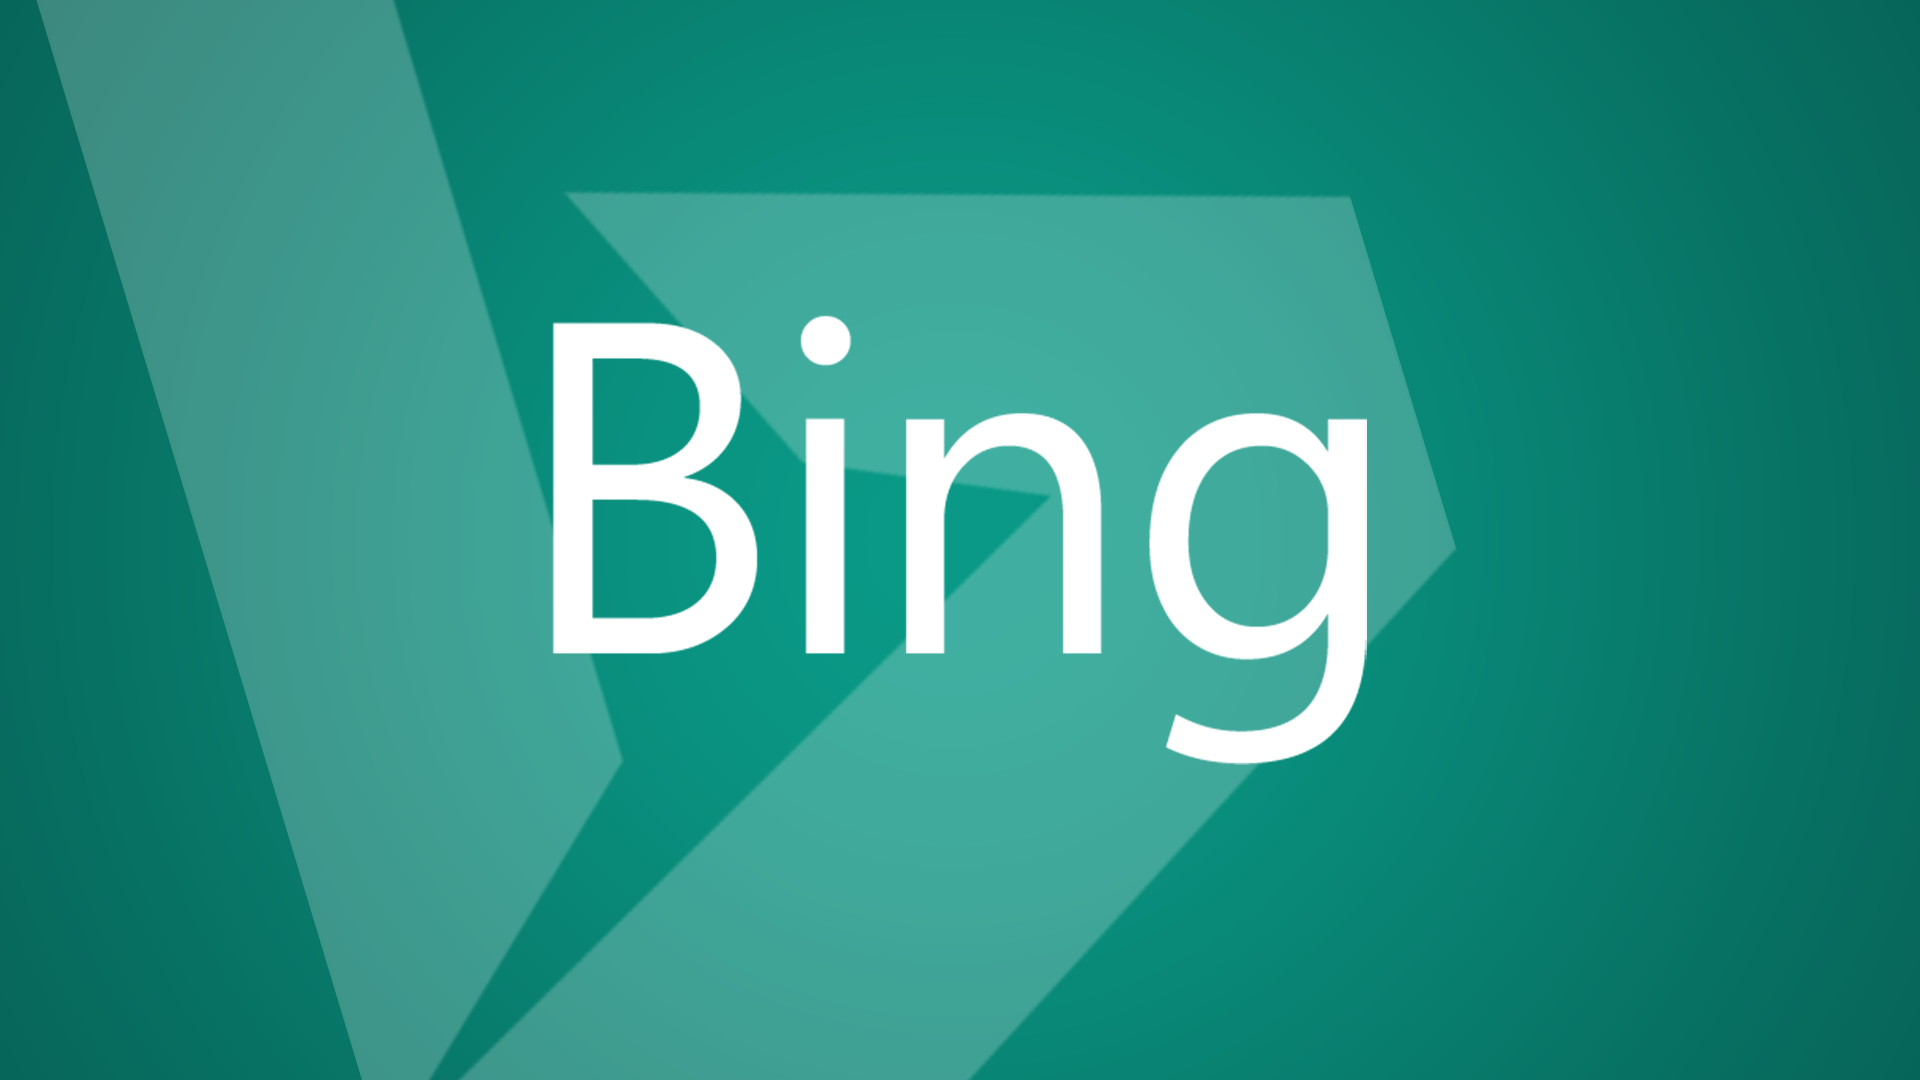 Bing 5